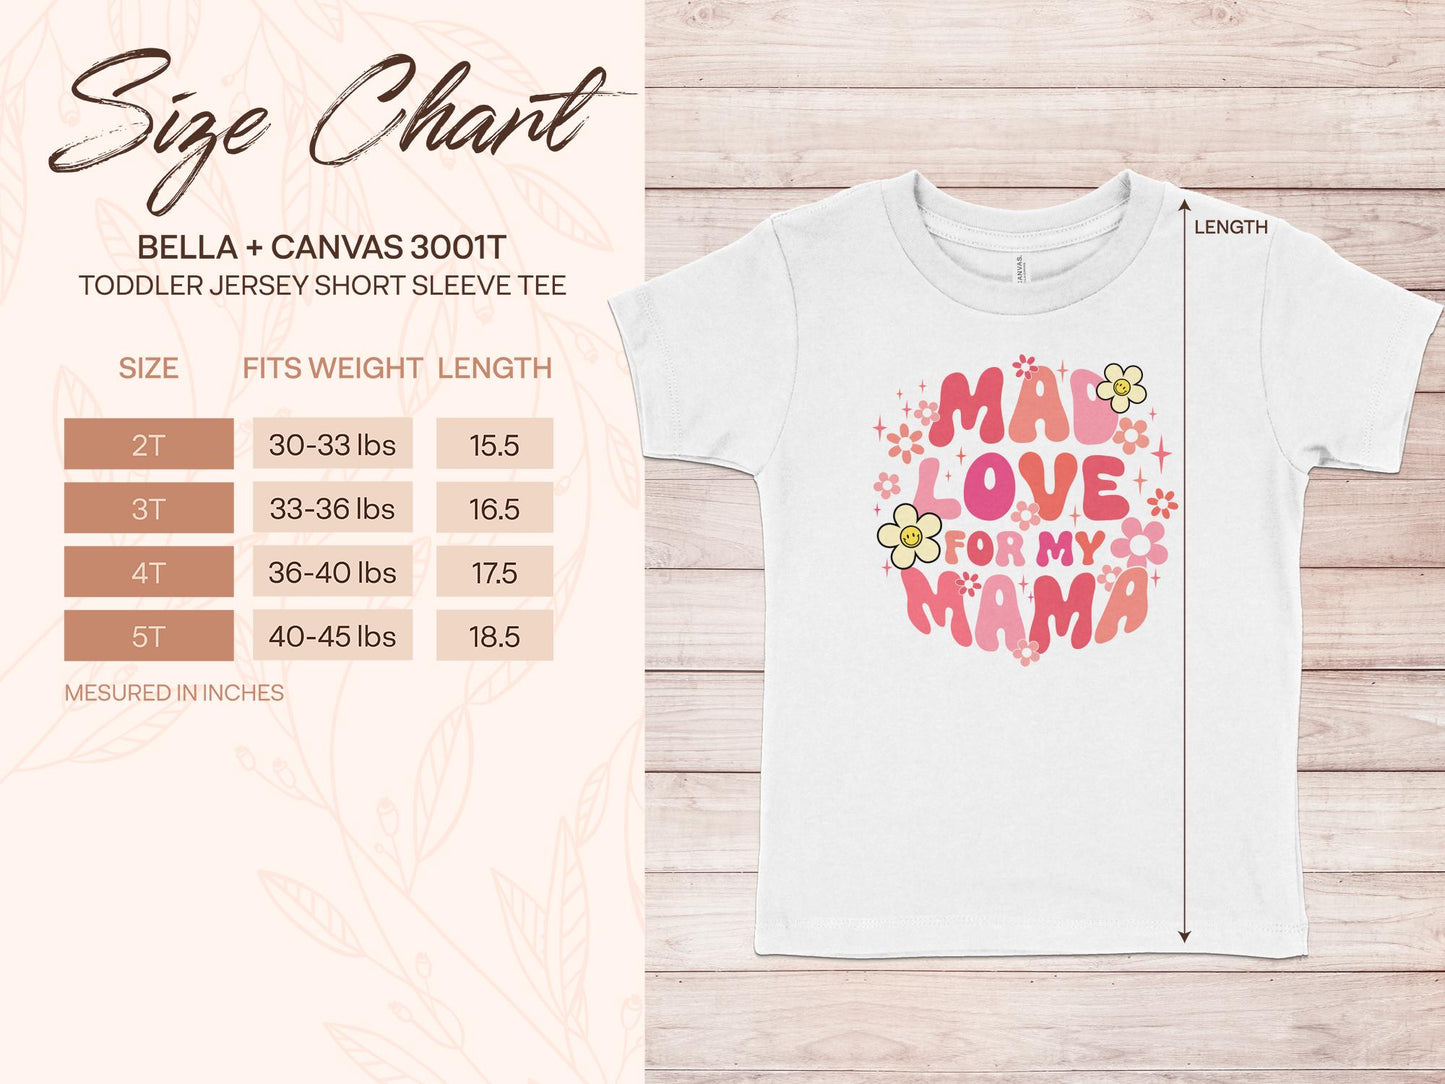 Mad Love for my Mama T-Shirt, Kids Valentines Shirt, Baby Girl Valentines Outfit, Kids Girls Valentine's Day Shirt - Mardonyx T-Shirt